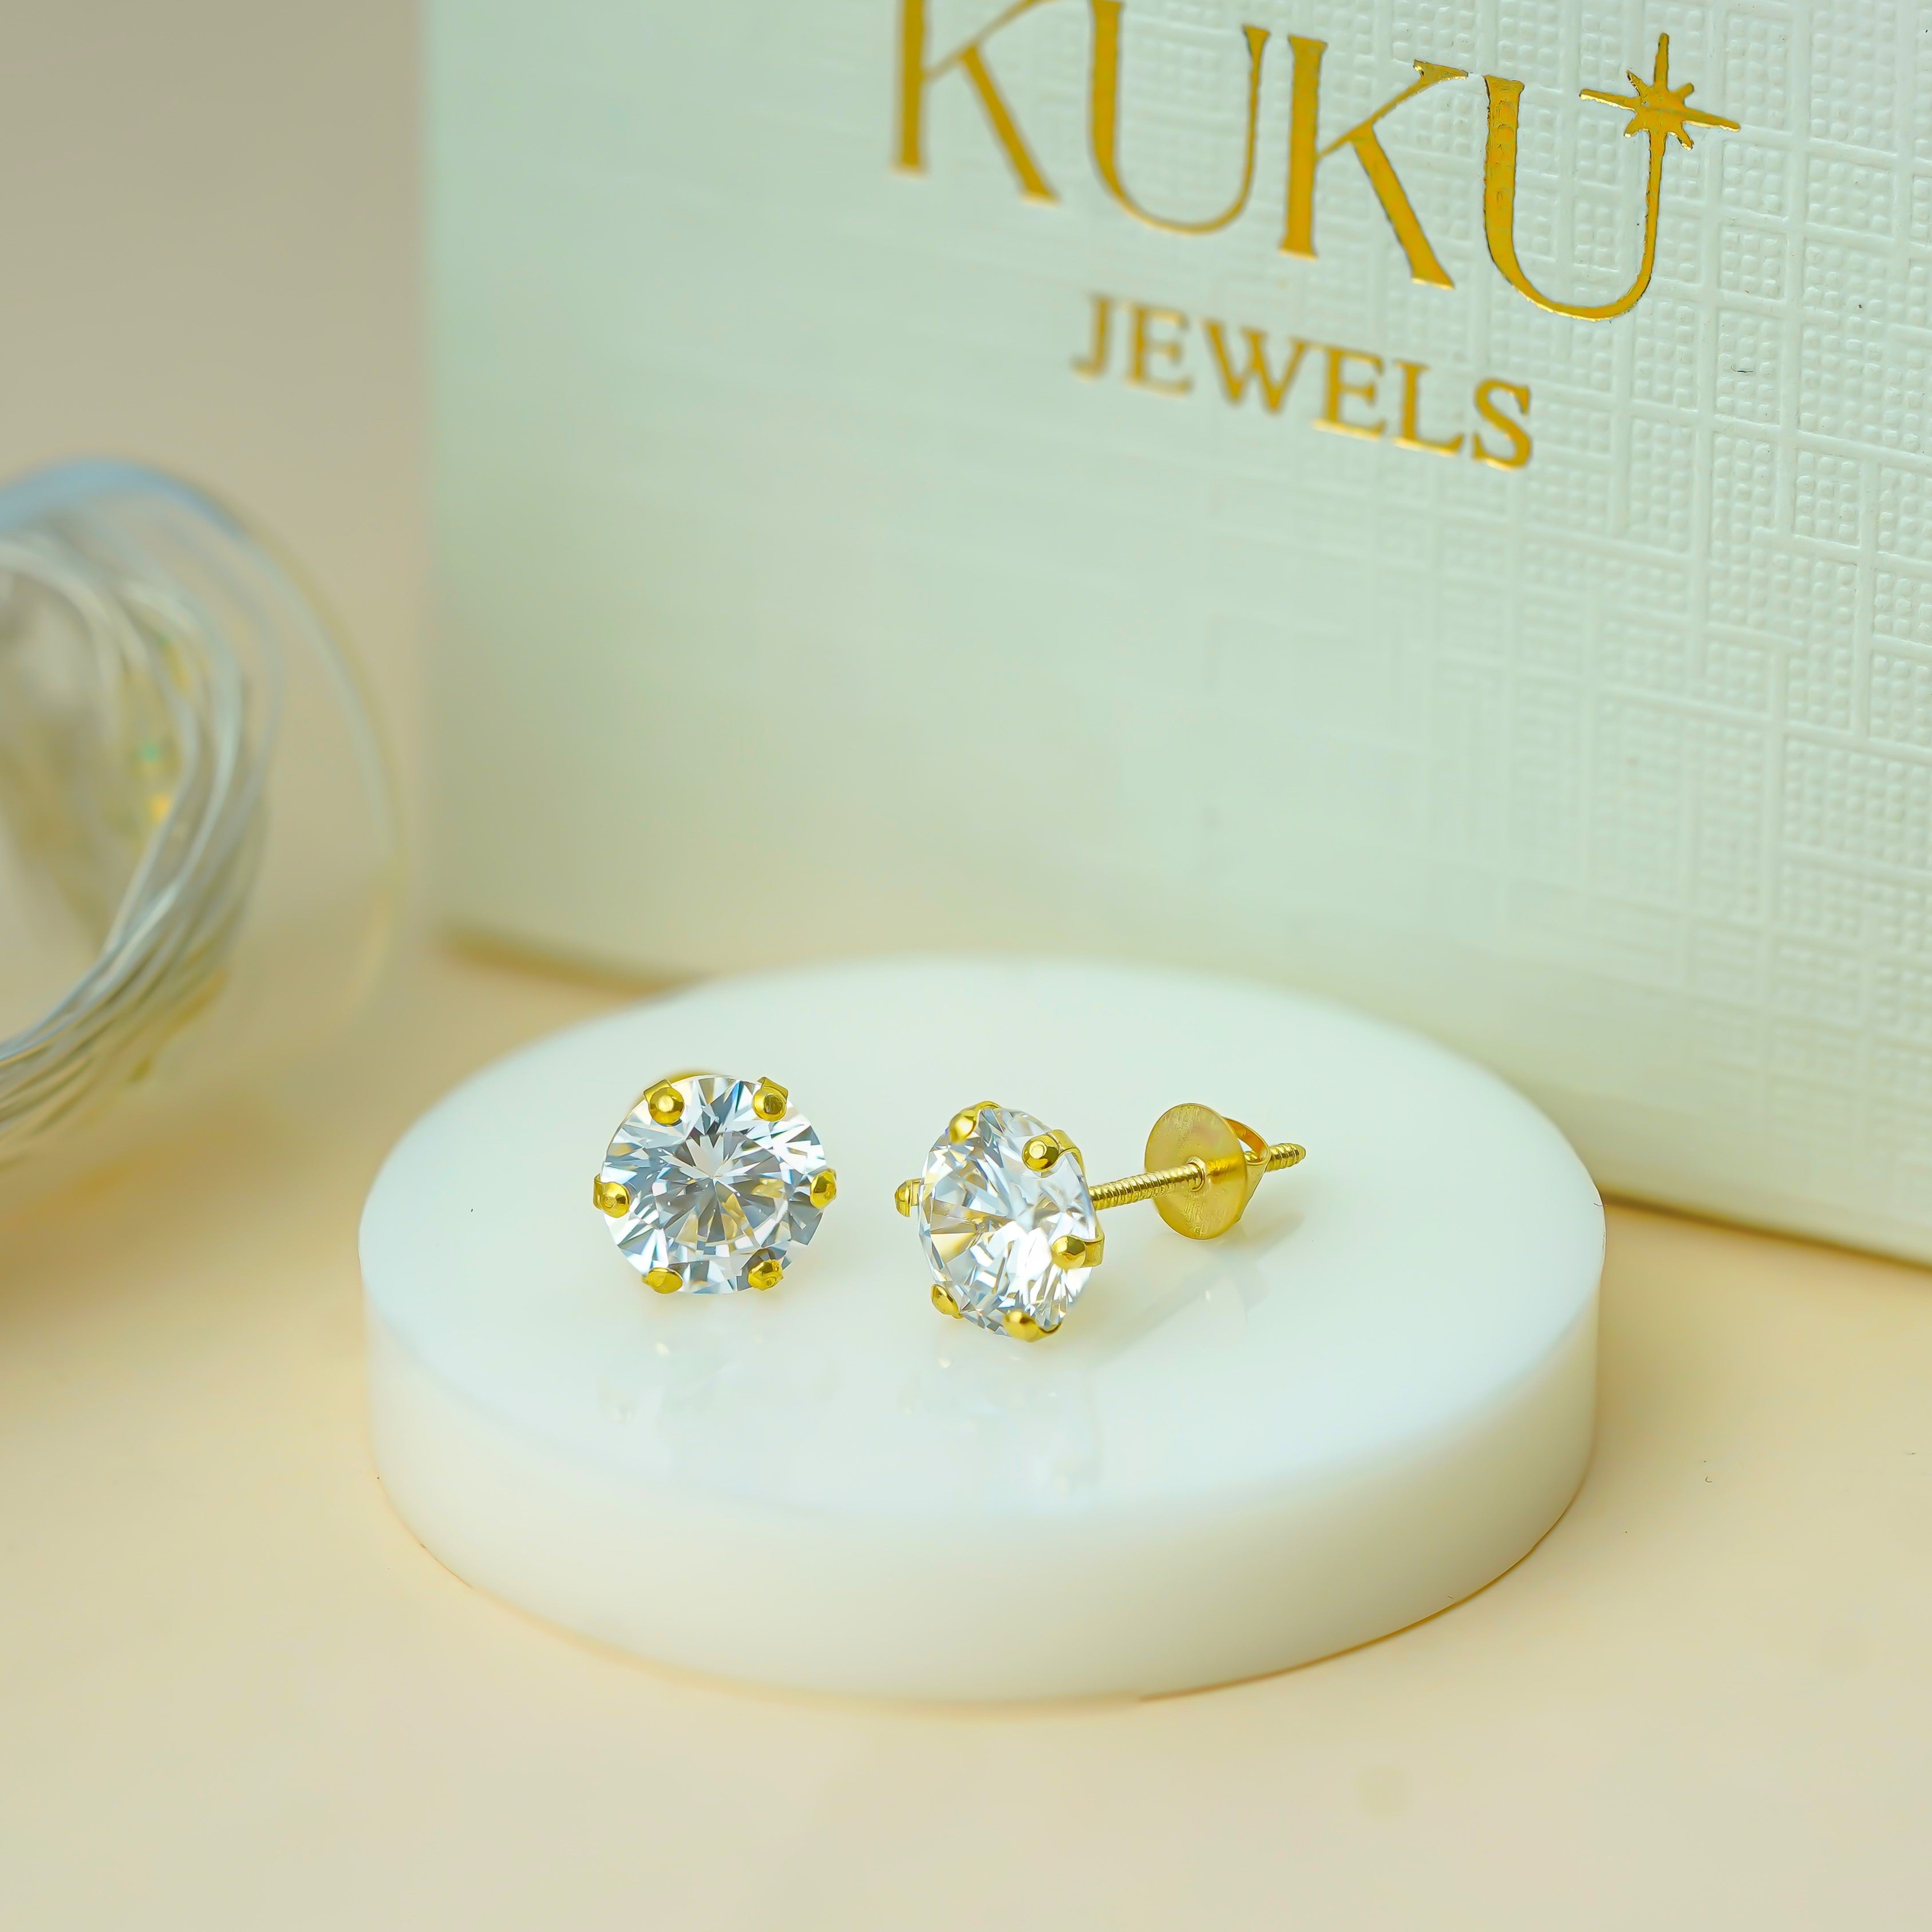 10 KT Gold White Round Cut Diamond Stud Earrings